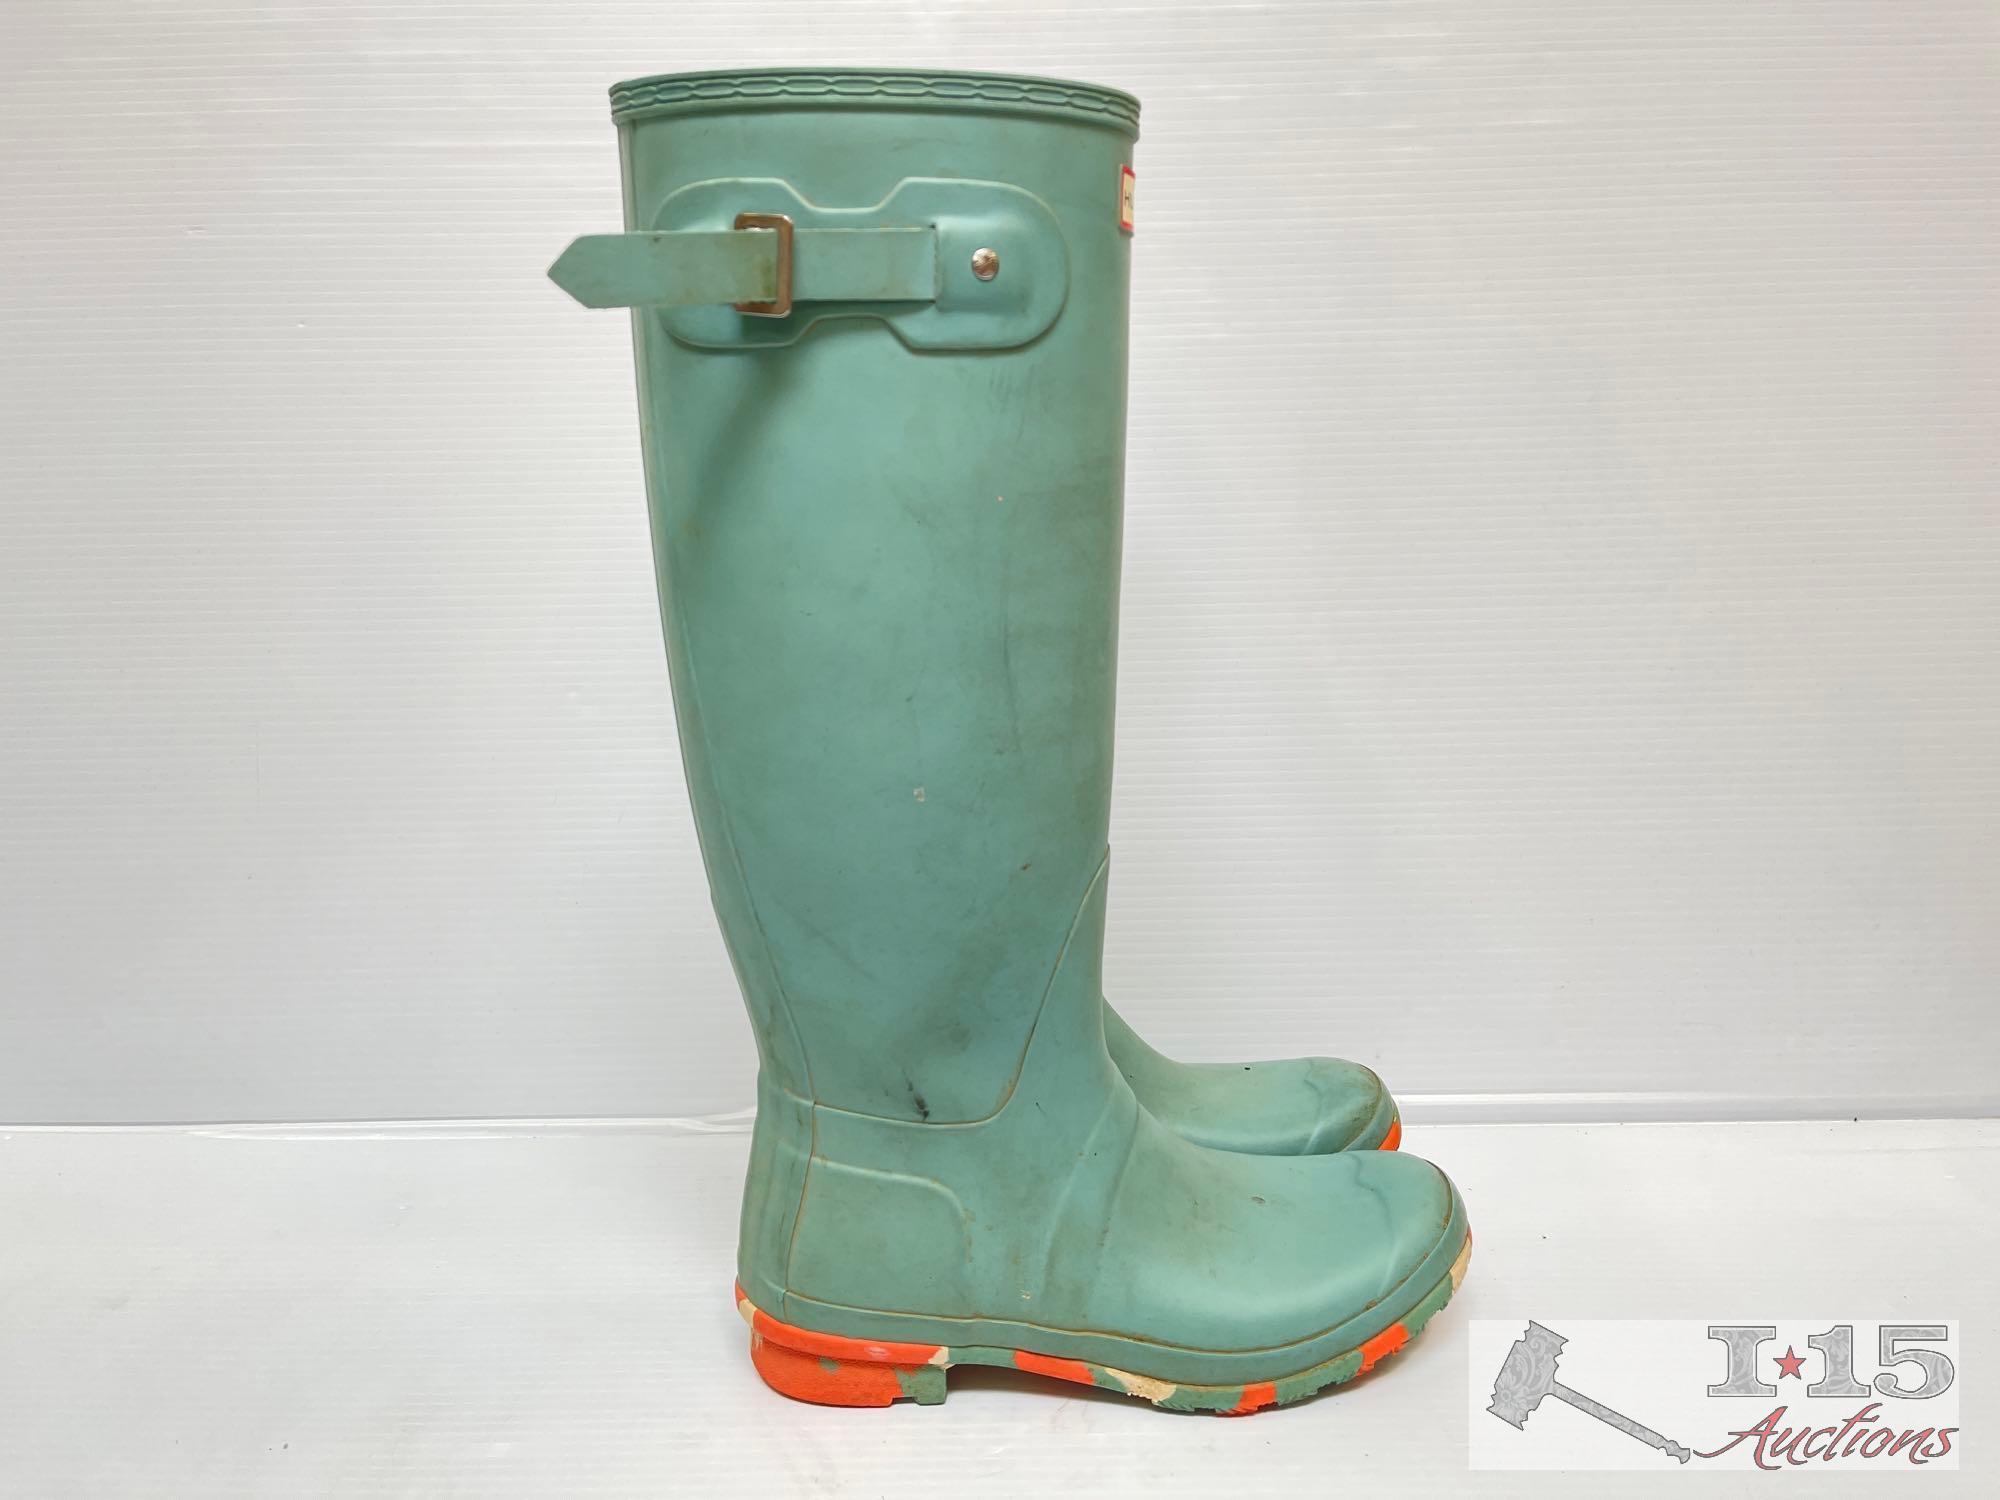 (4) Pairs of Hunter Waterproof Boots